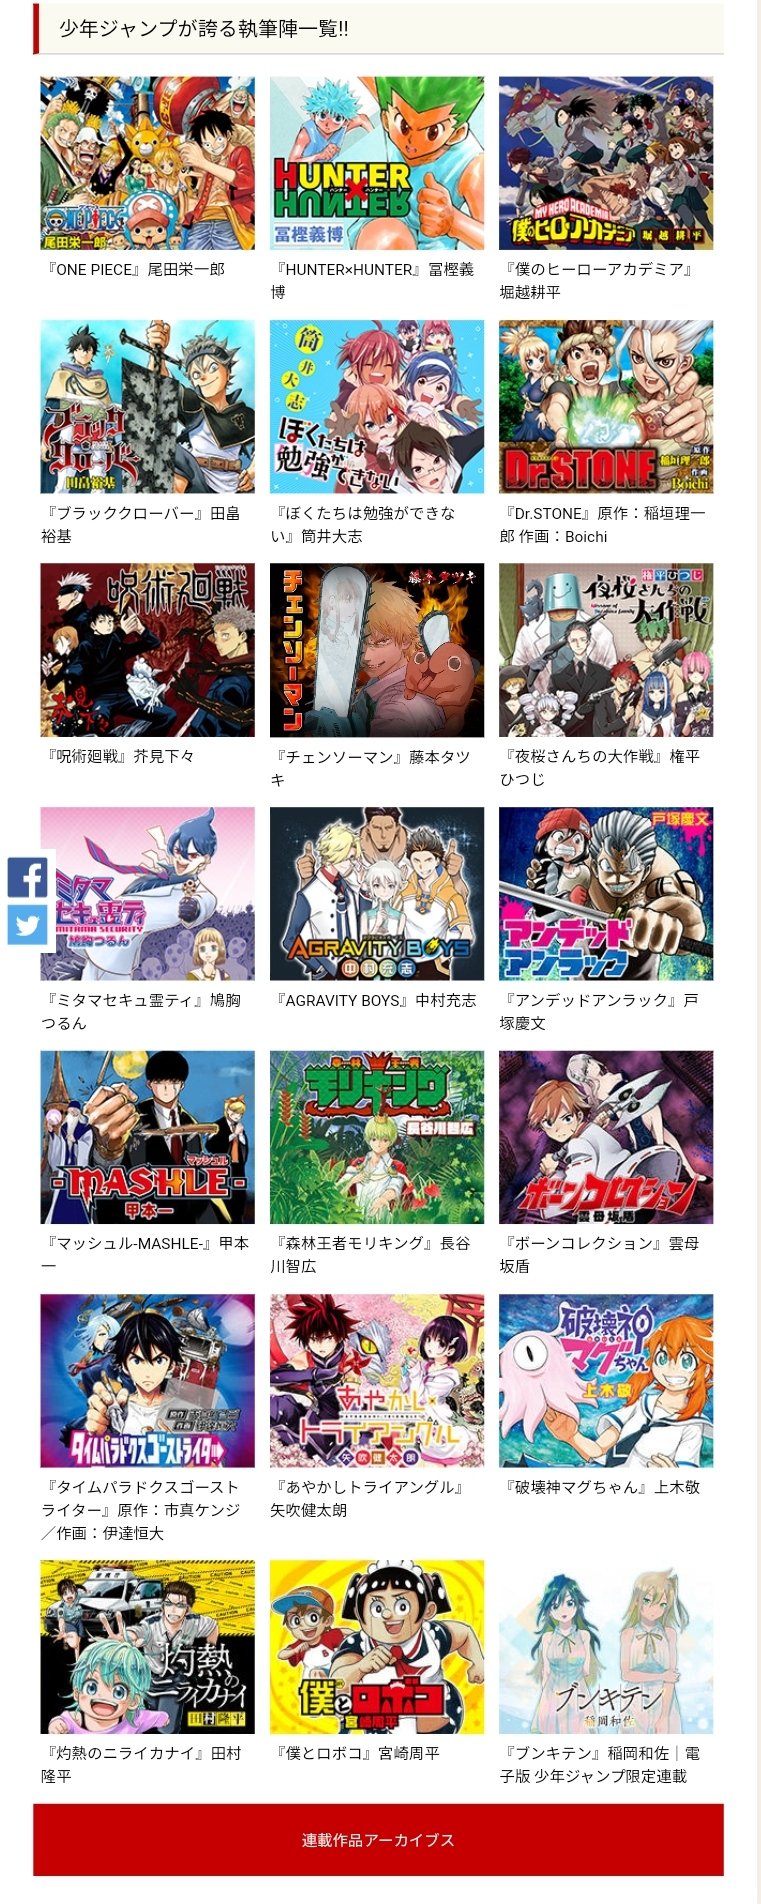 Shuukan Shounen Jump 50th Anniversary Best Anime Mix Vol 3: Amazon.sg: Music